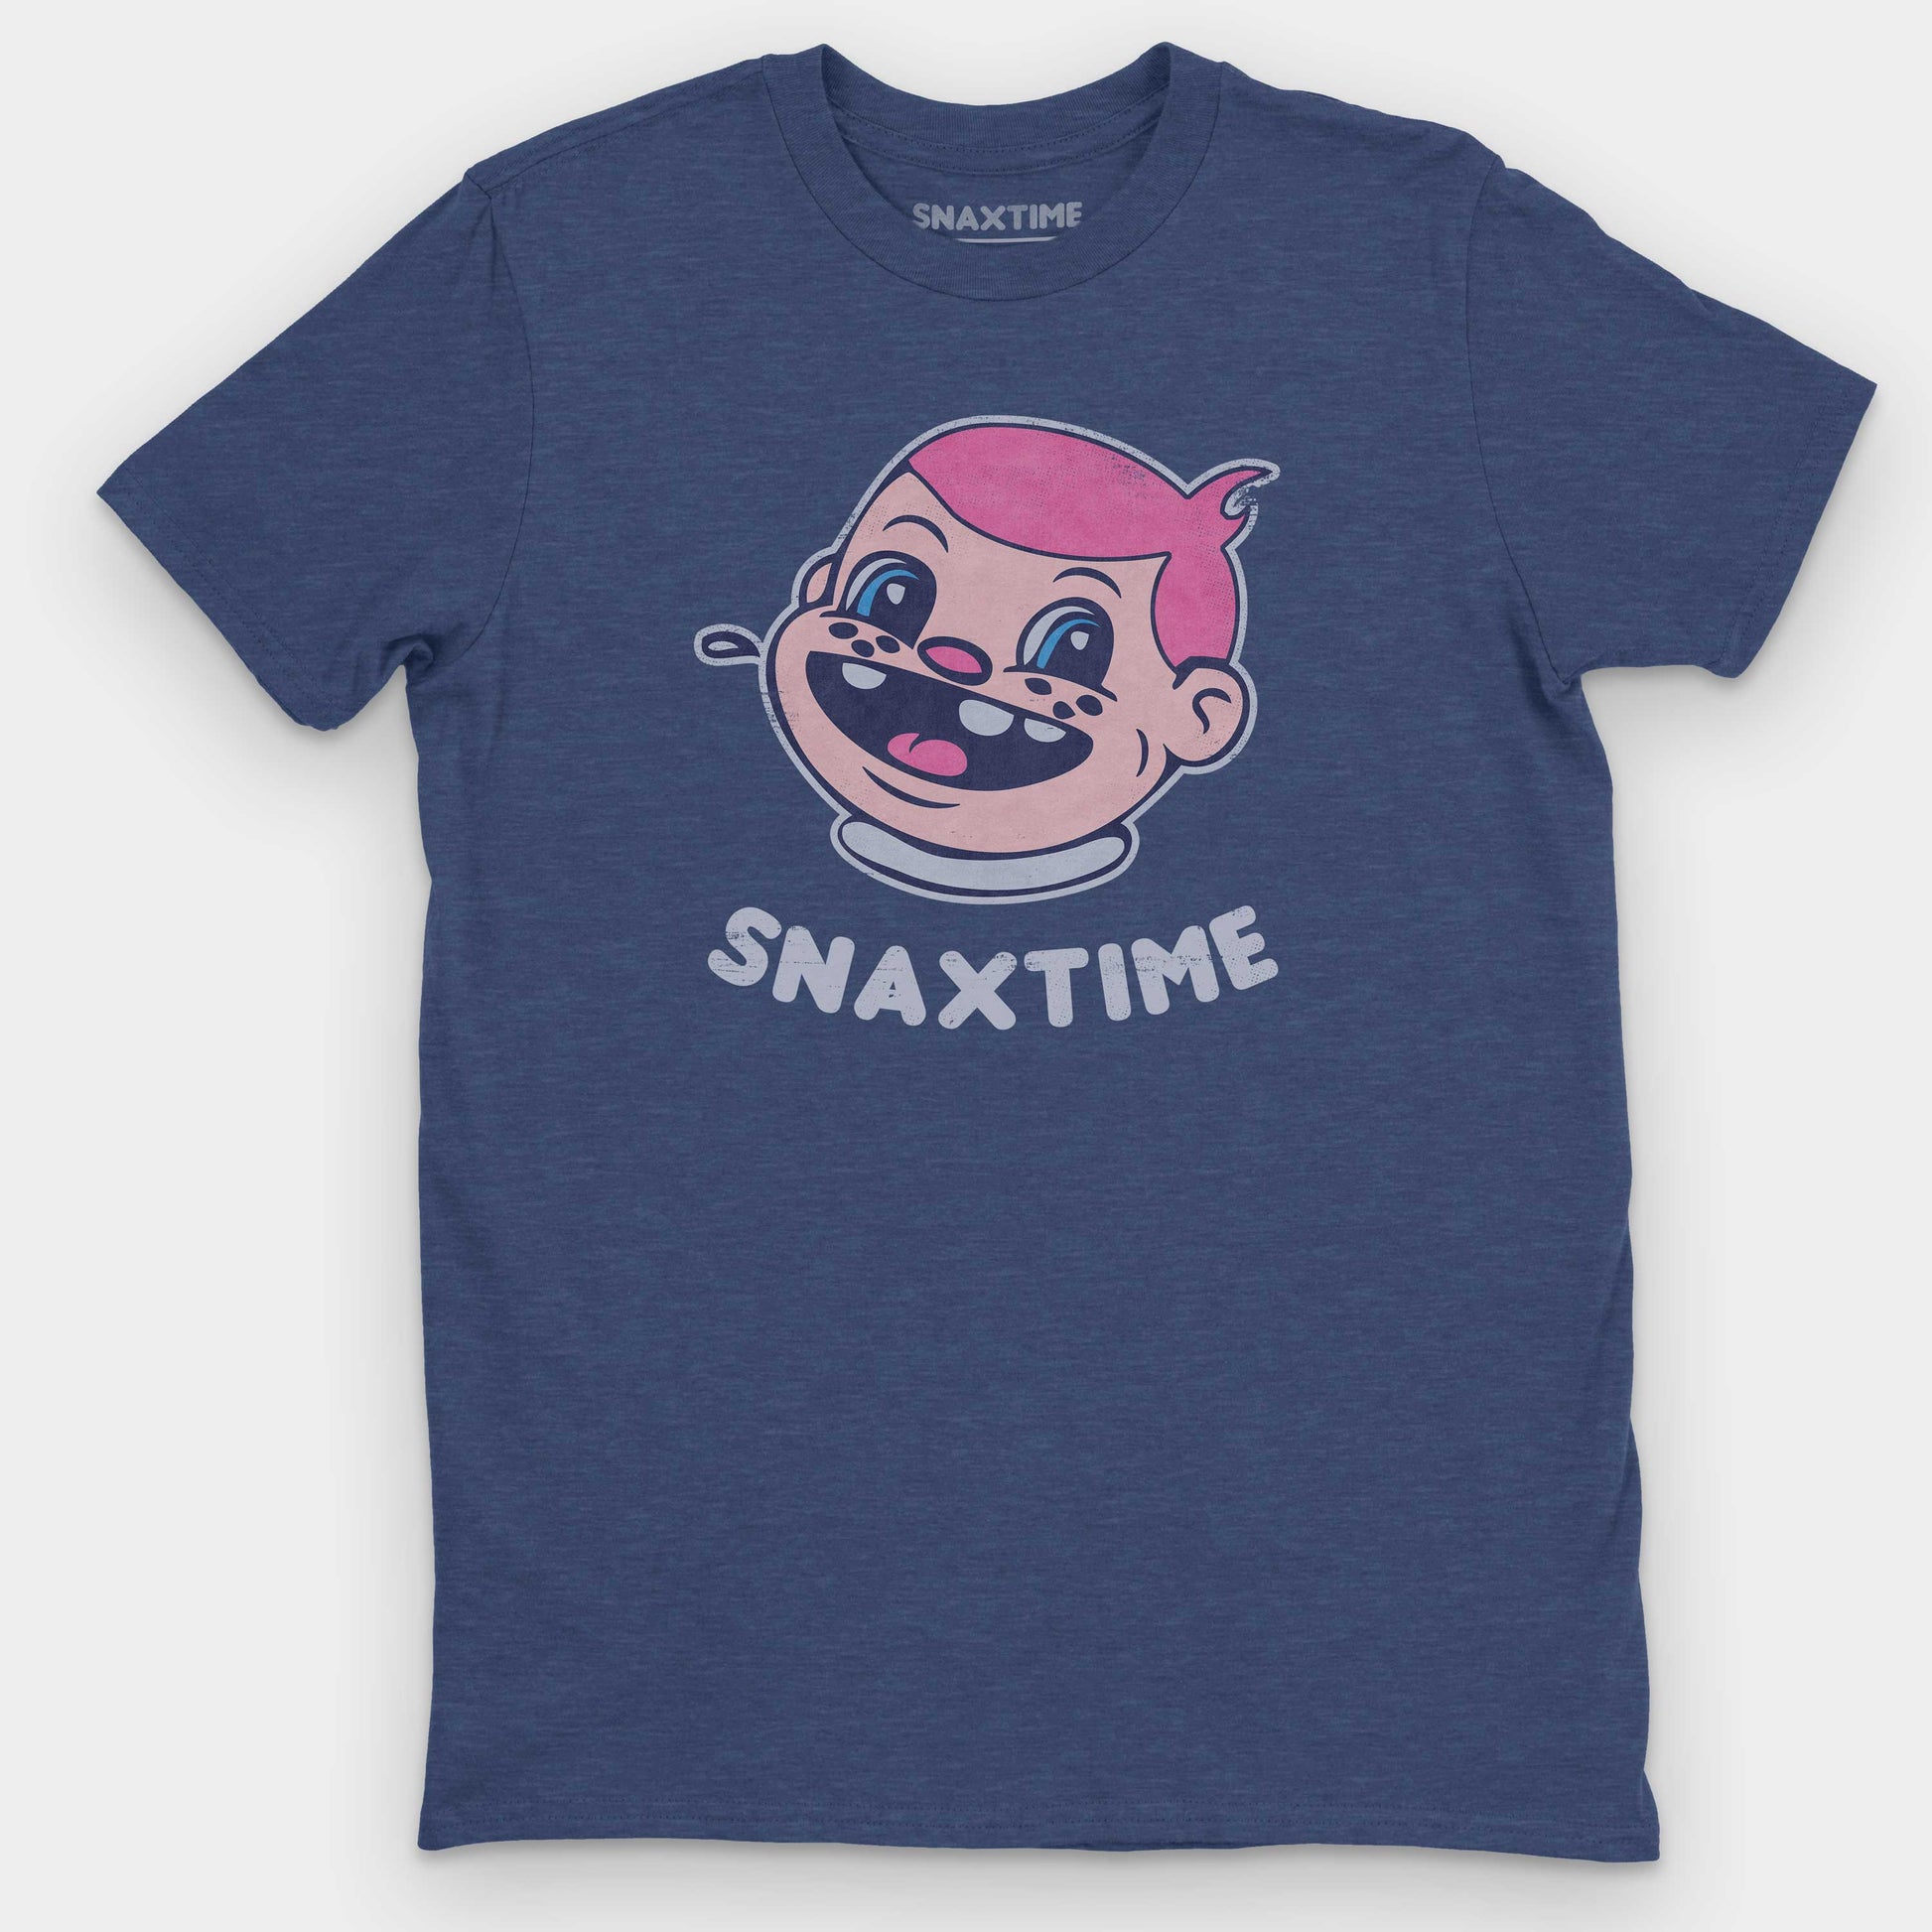 Heather Blue Snaxtime Original Graphic T-Shirt by Snaxtime